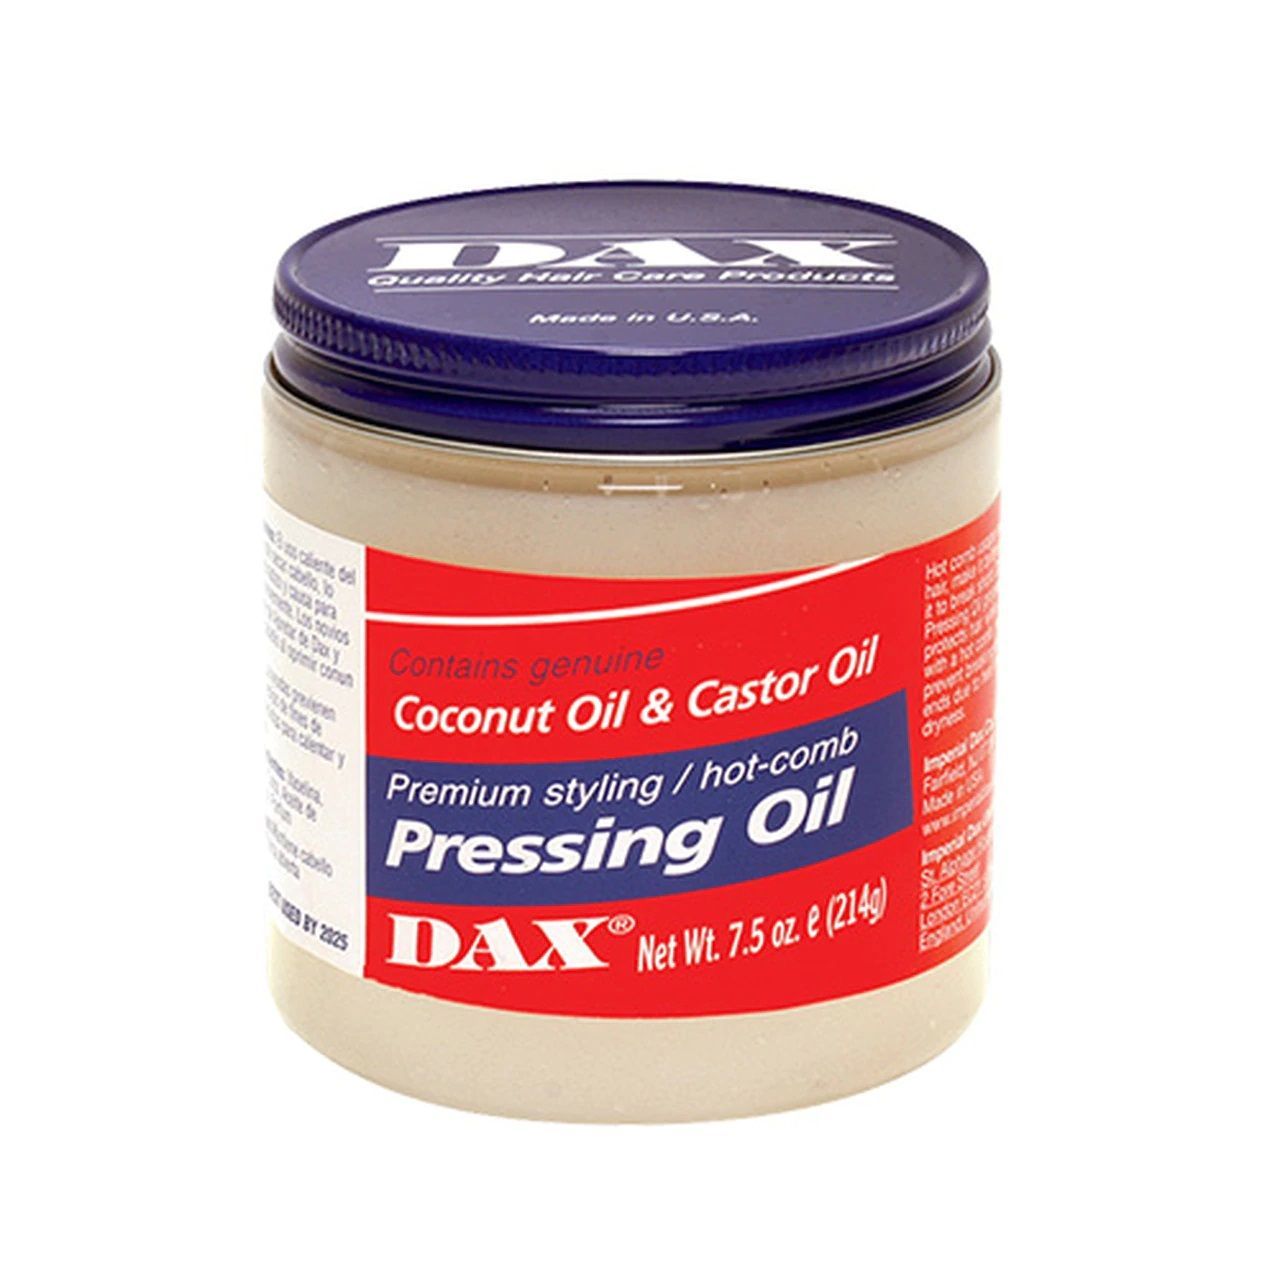 DAX Pressing Oil - 7.5oz